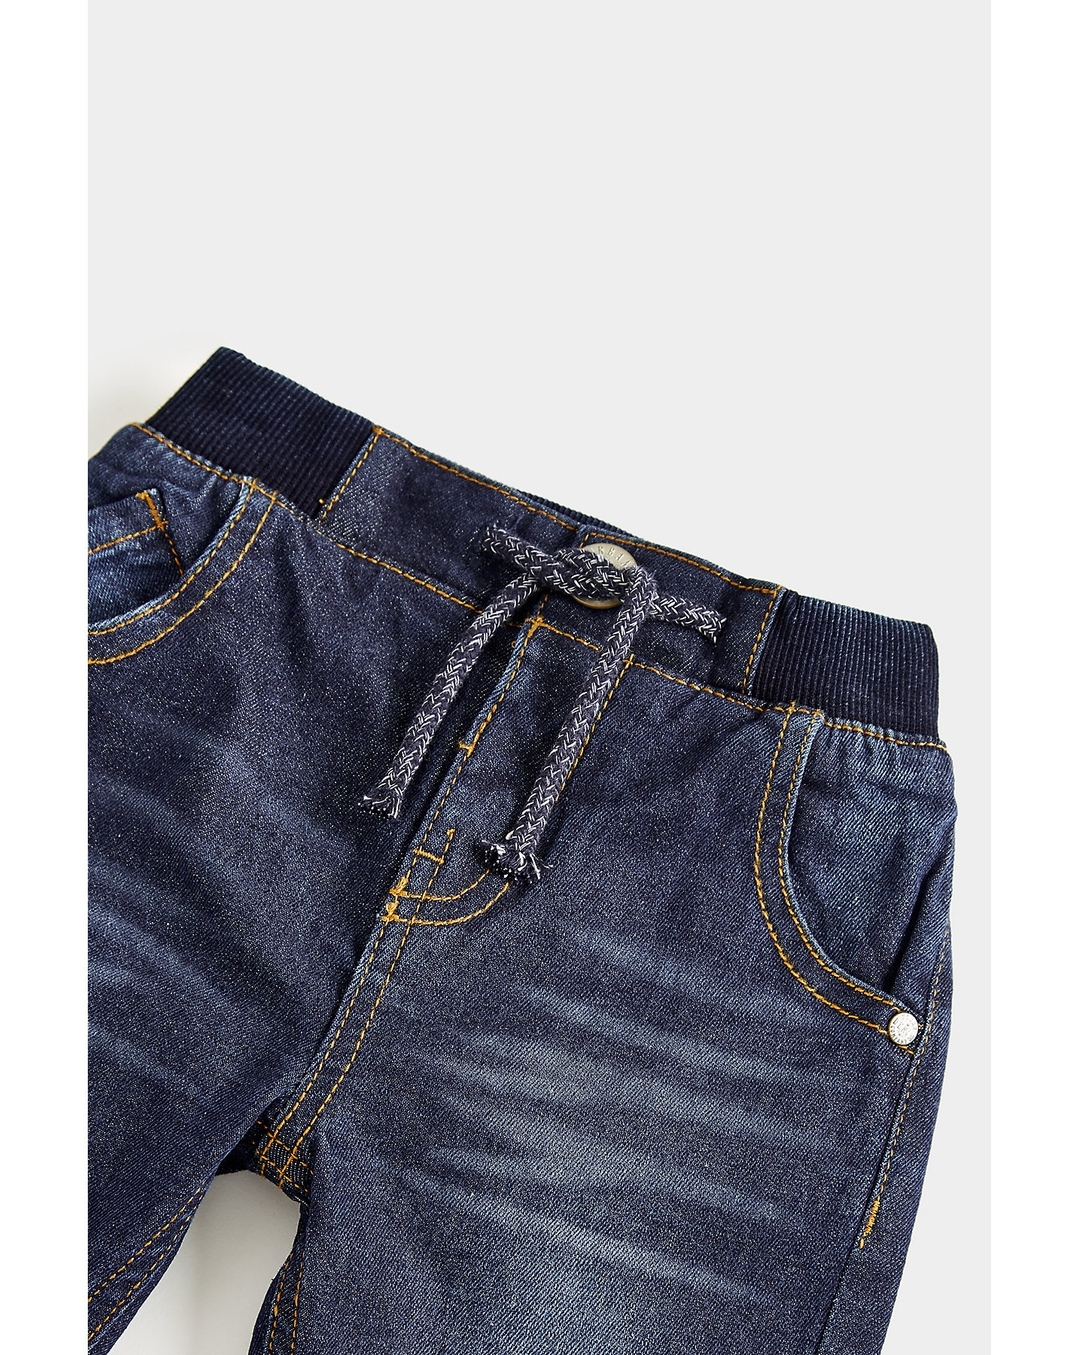 Latest Stylish Jeans Pants For Kids 2020-2021/ Boys Jeans Design Ideas/Kids  Denim Jeans | Kids denim jeans, Ripped jeans men, Stylish jeans